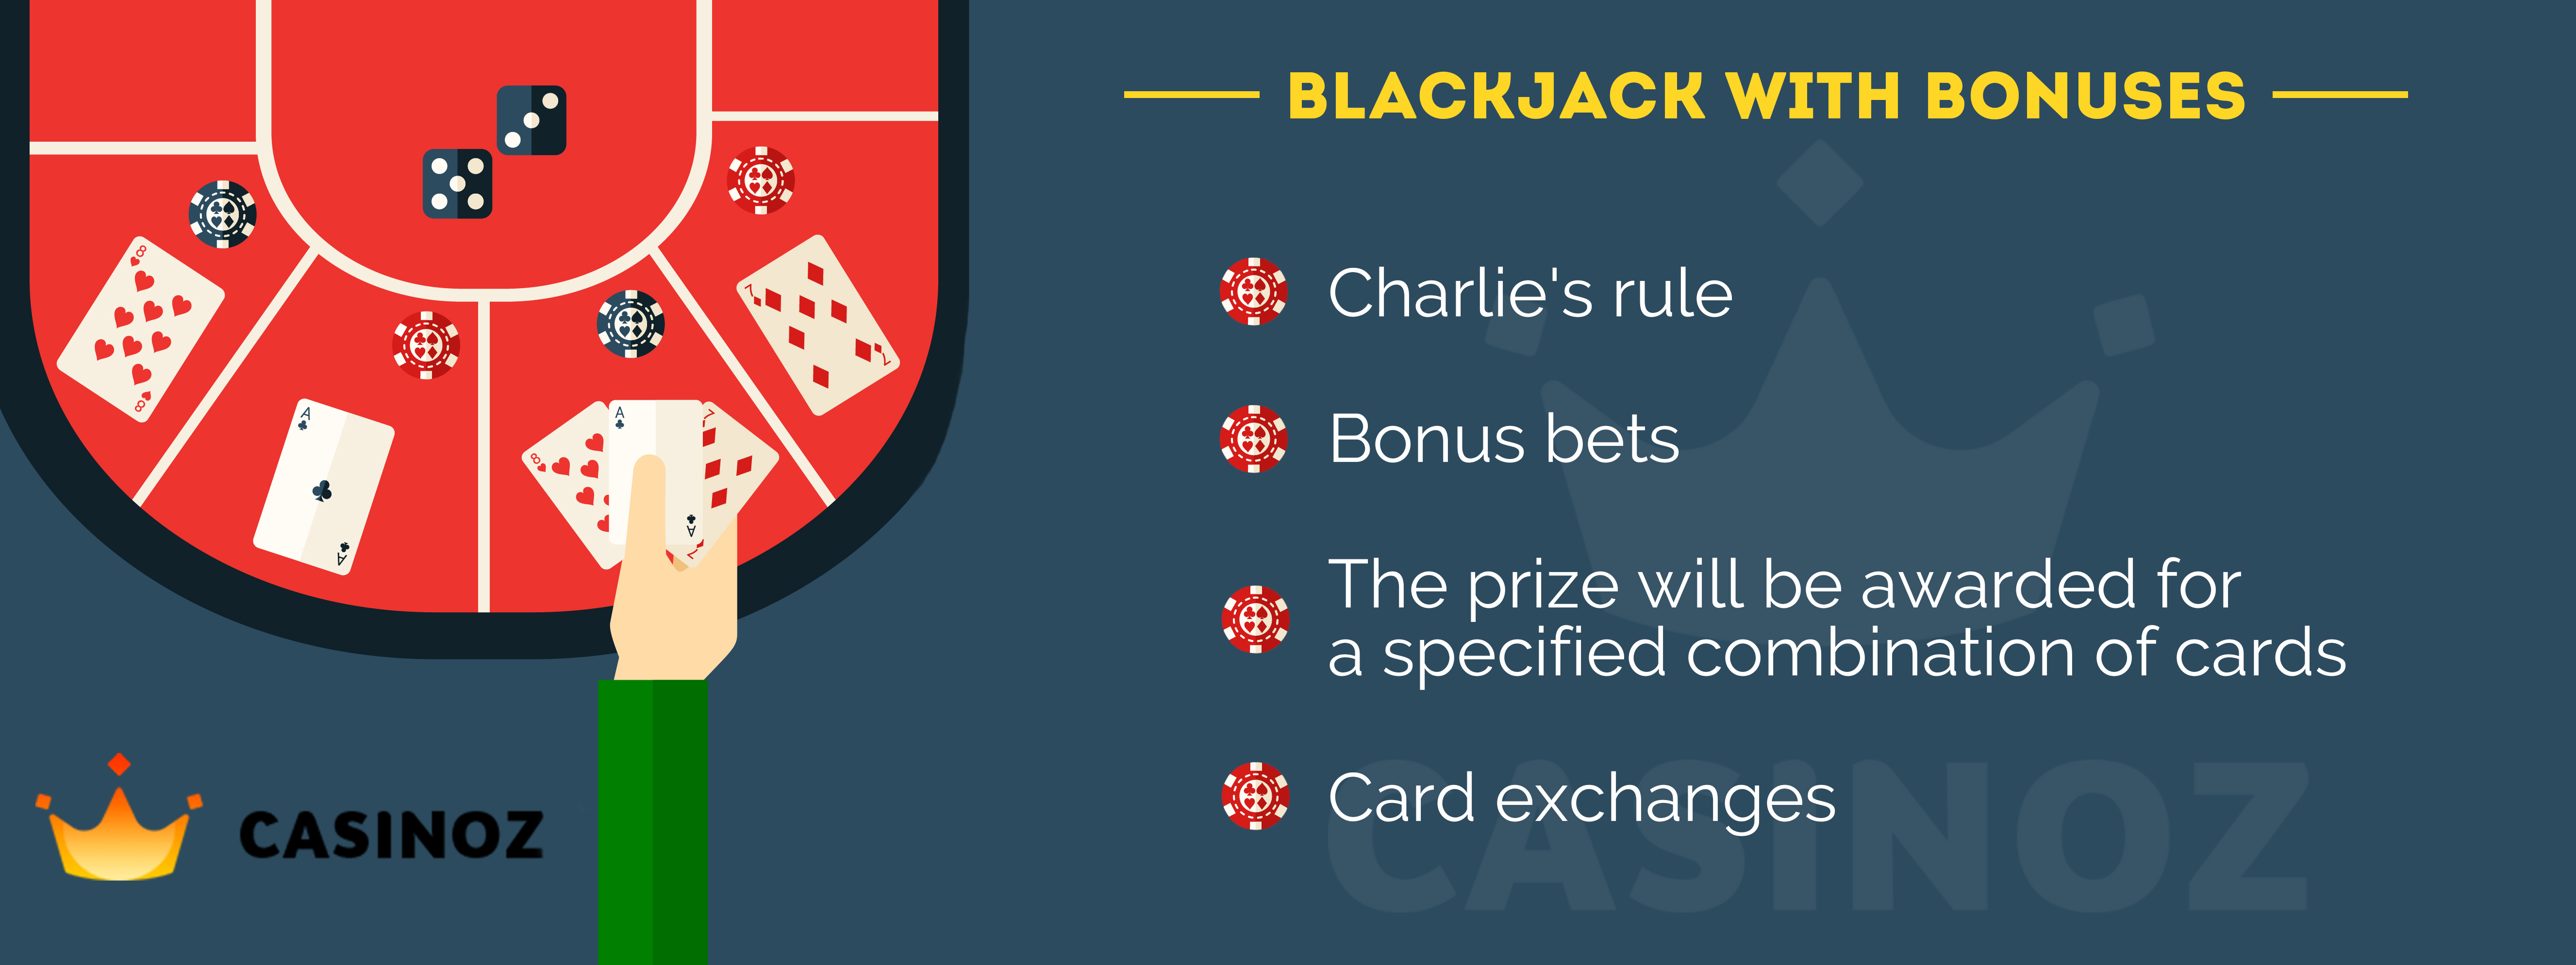 black jack casino rules